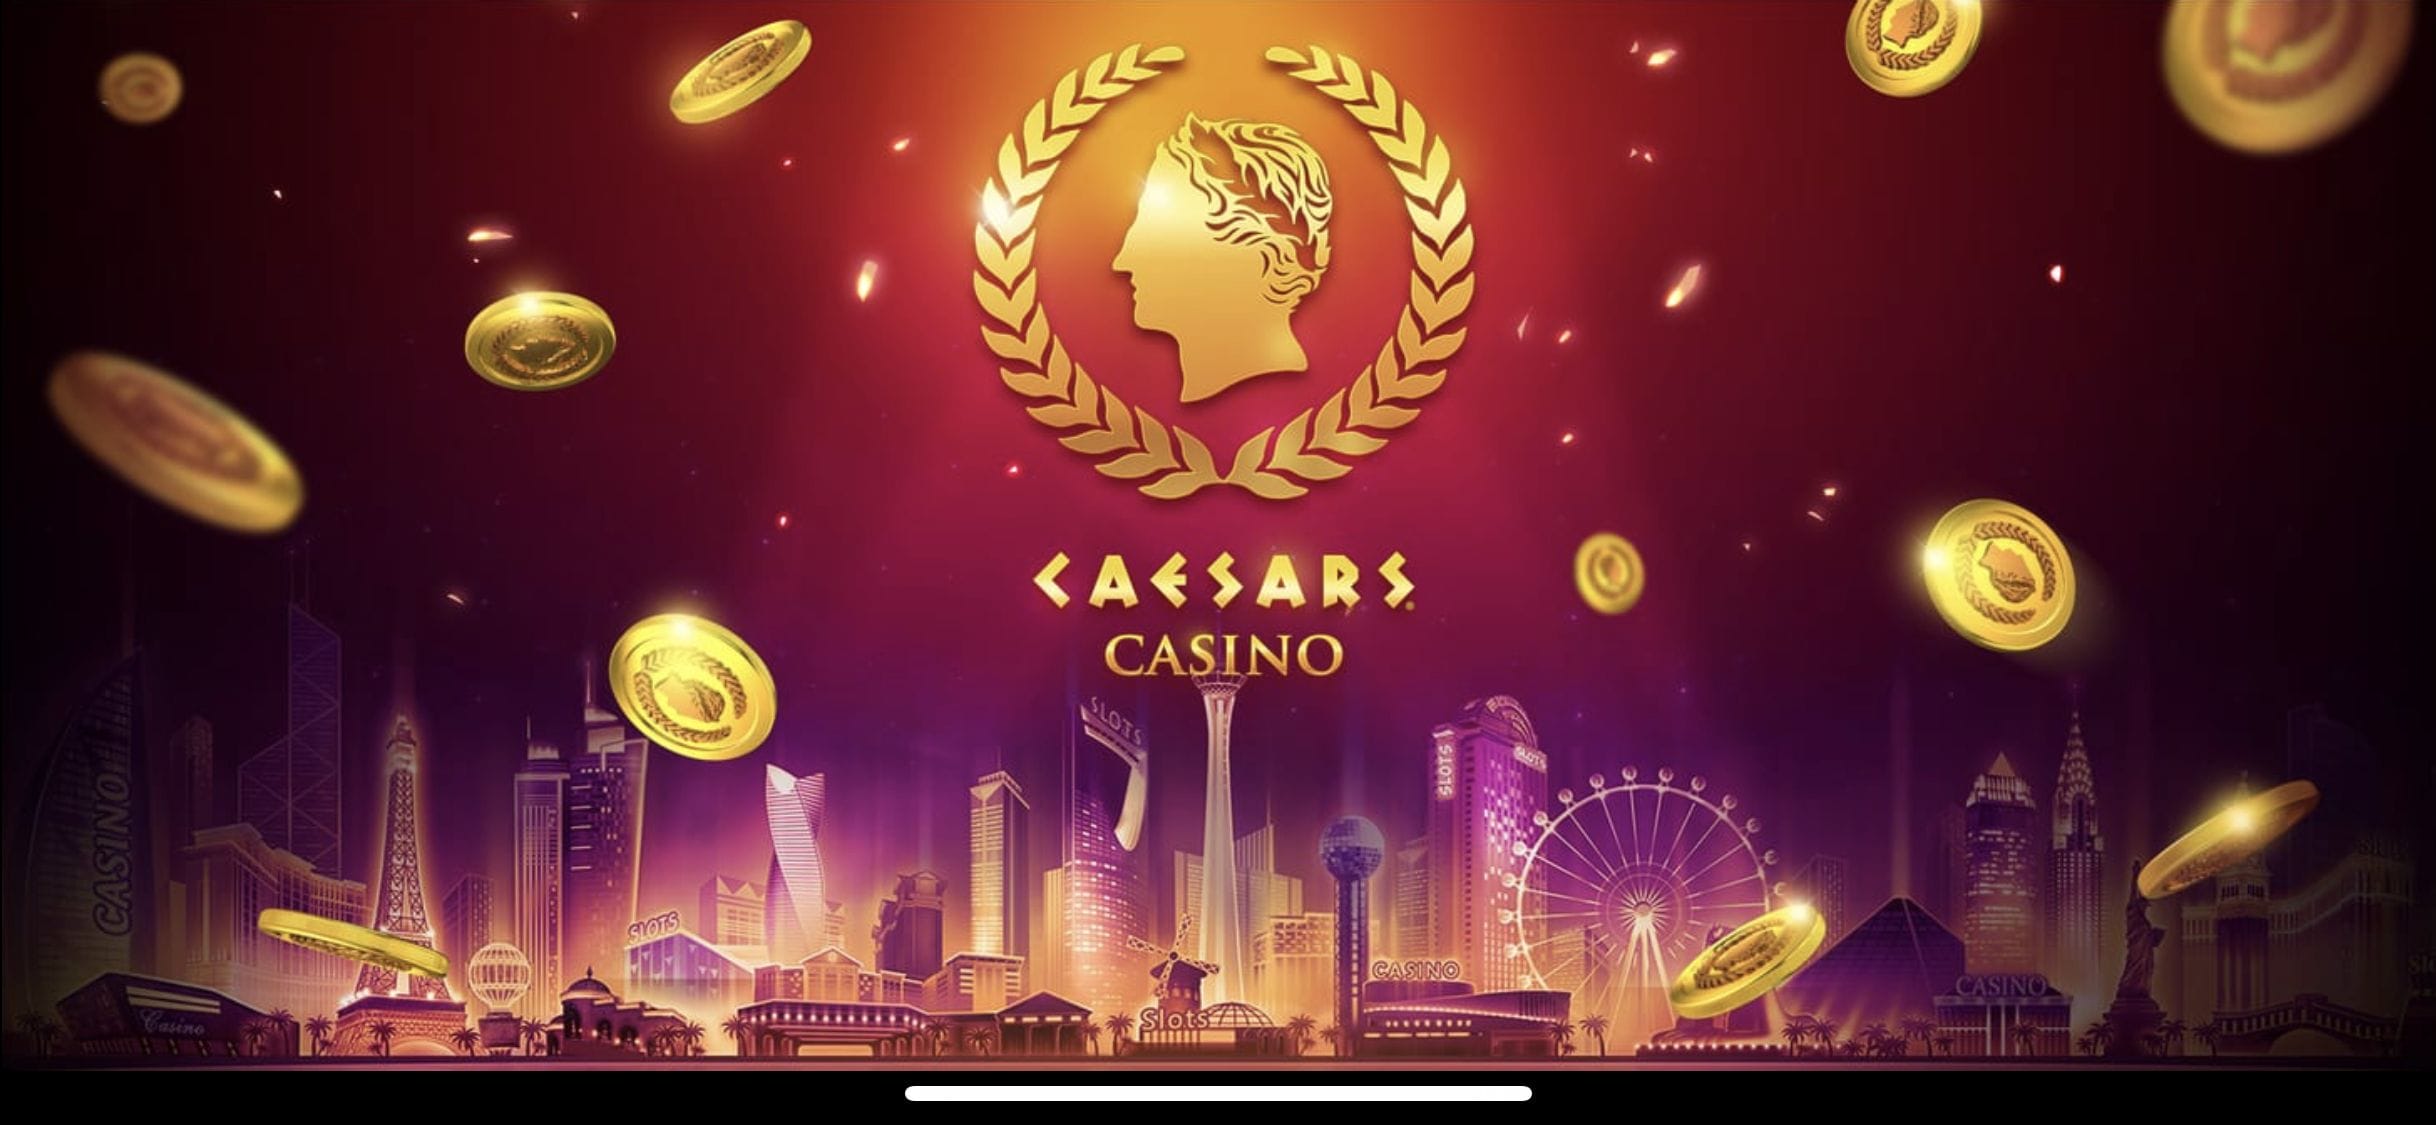 Jackpot Party Casino Free Chips - Web Hosting Videos Slot Machine